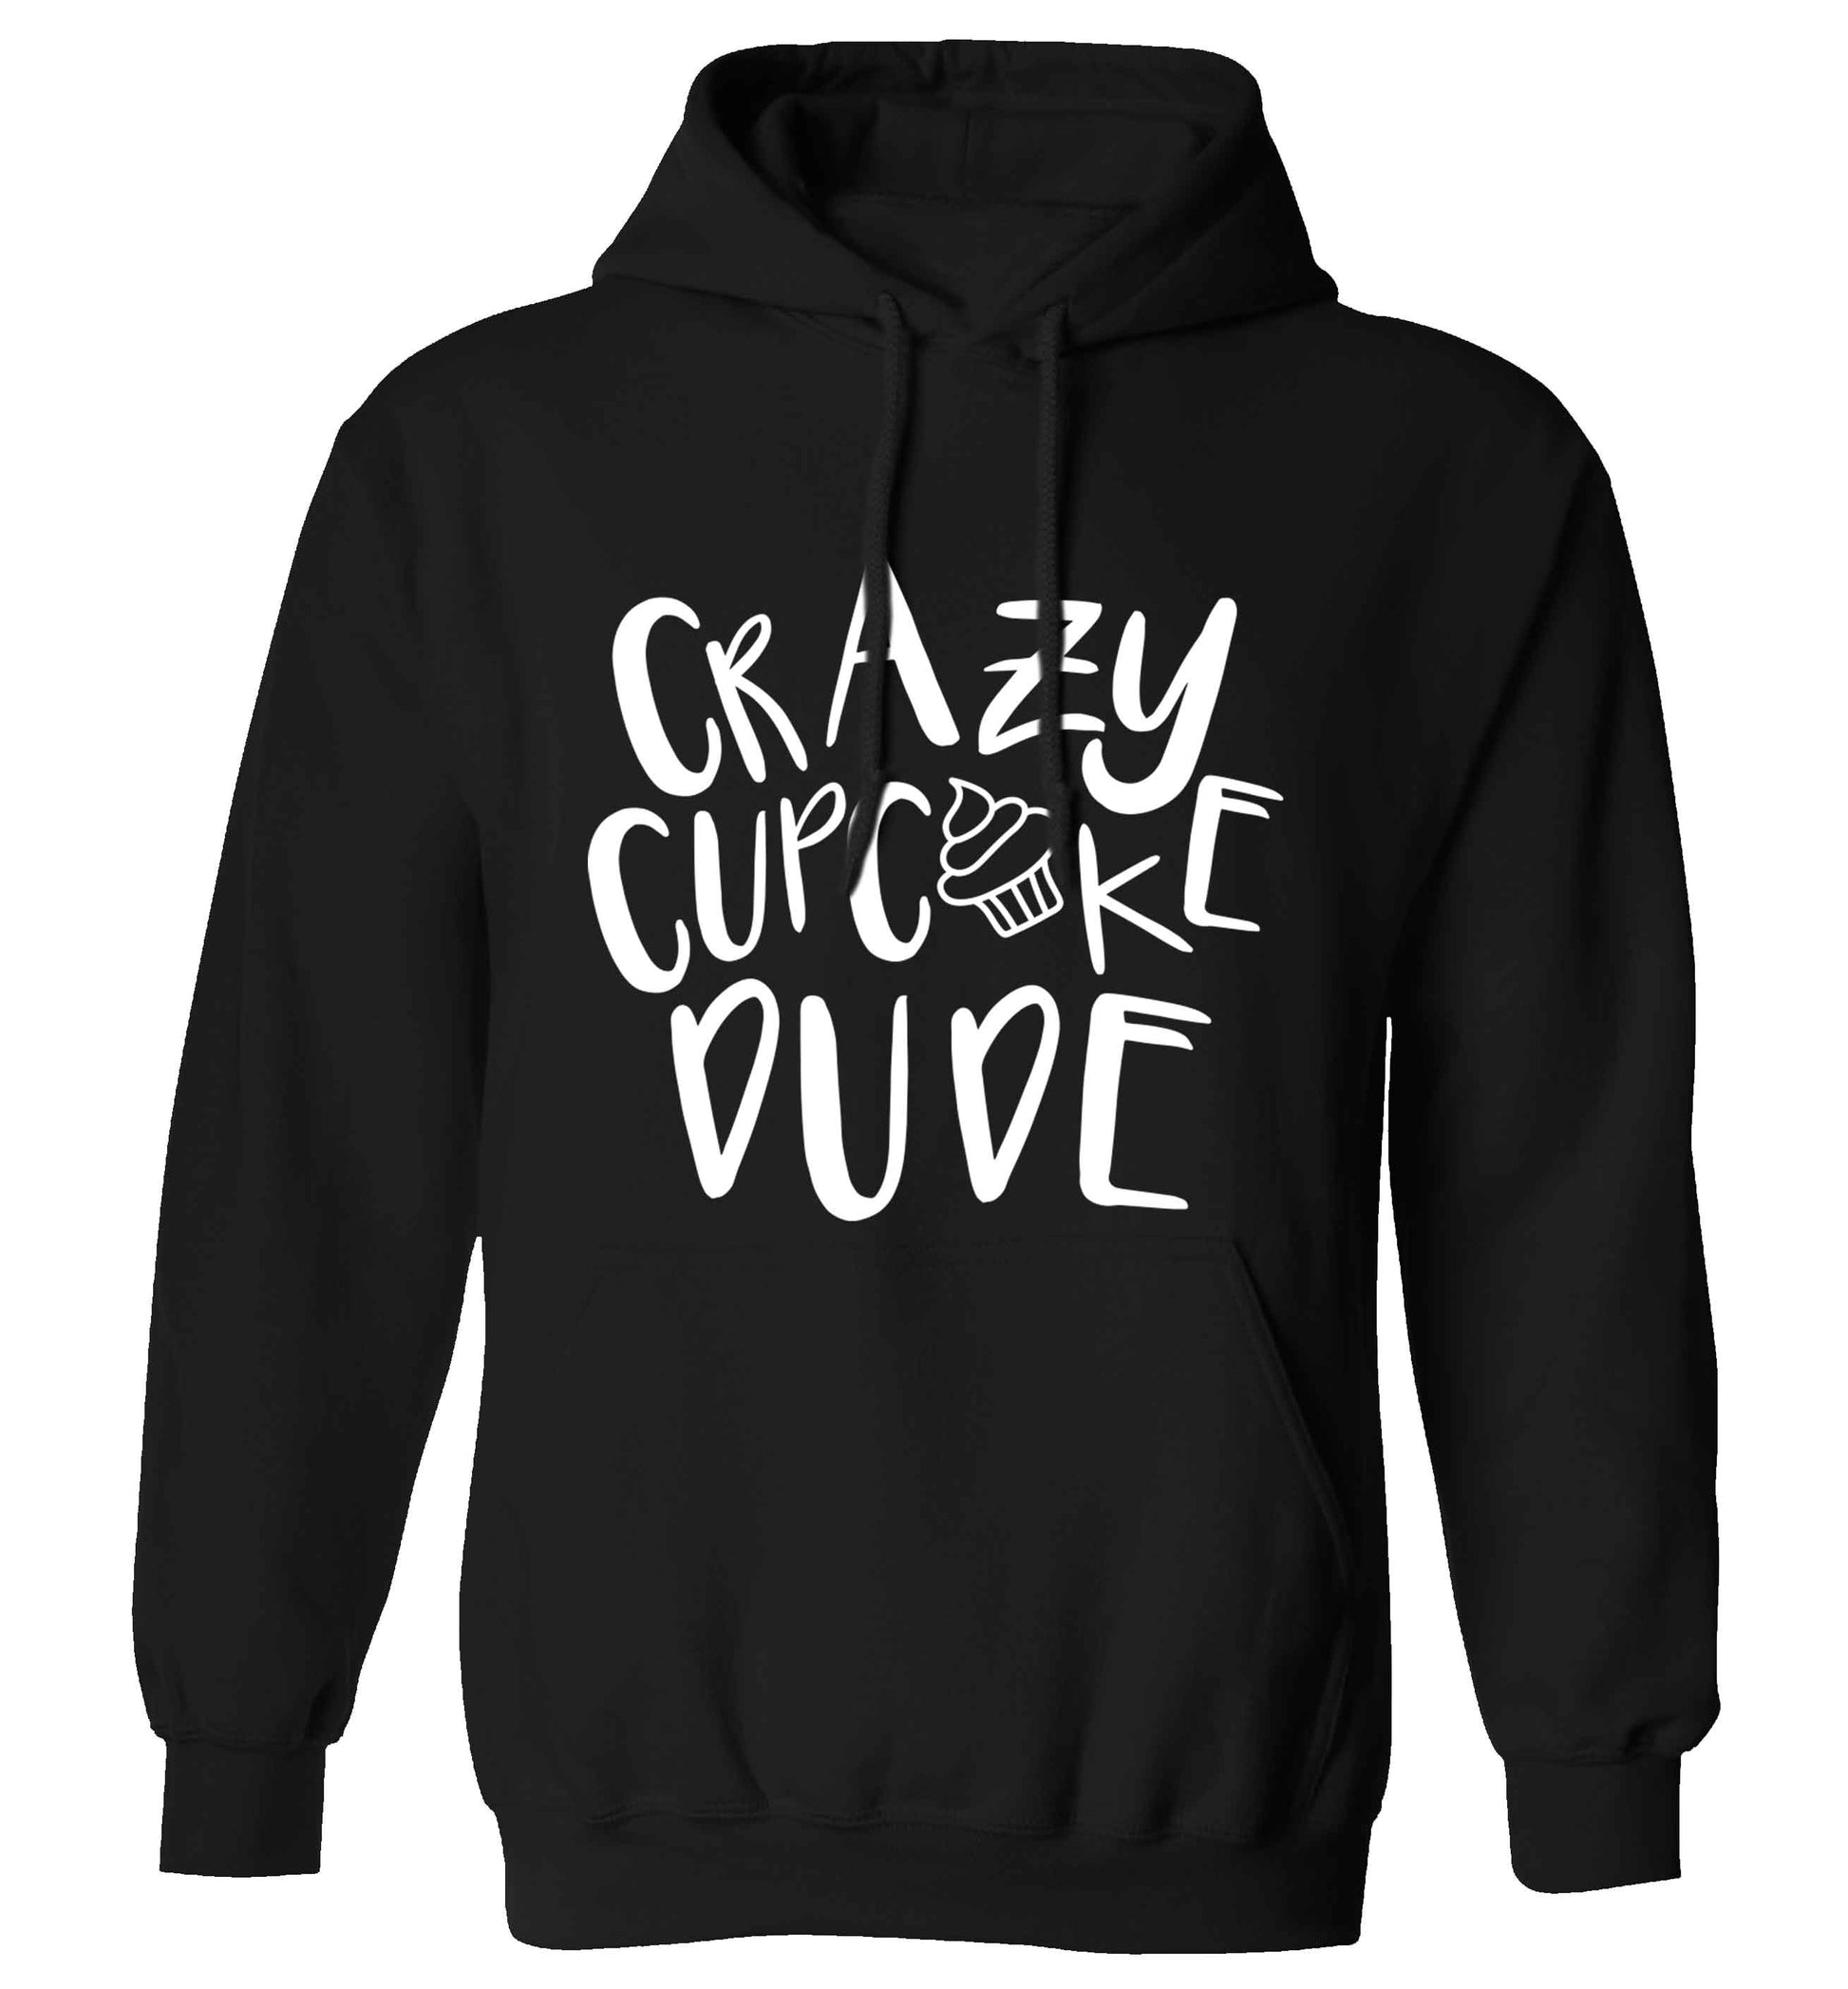 Crazy cupcake dude adults unisex black hoodie 2XL